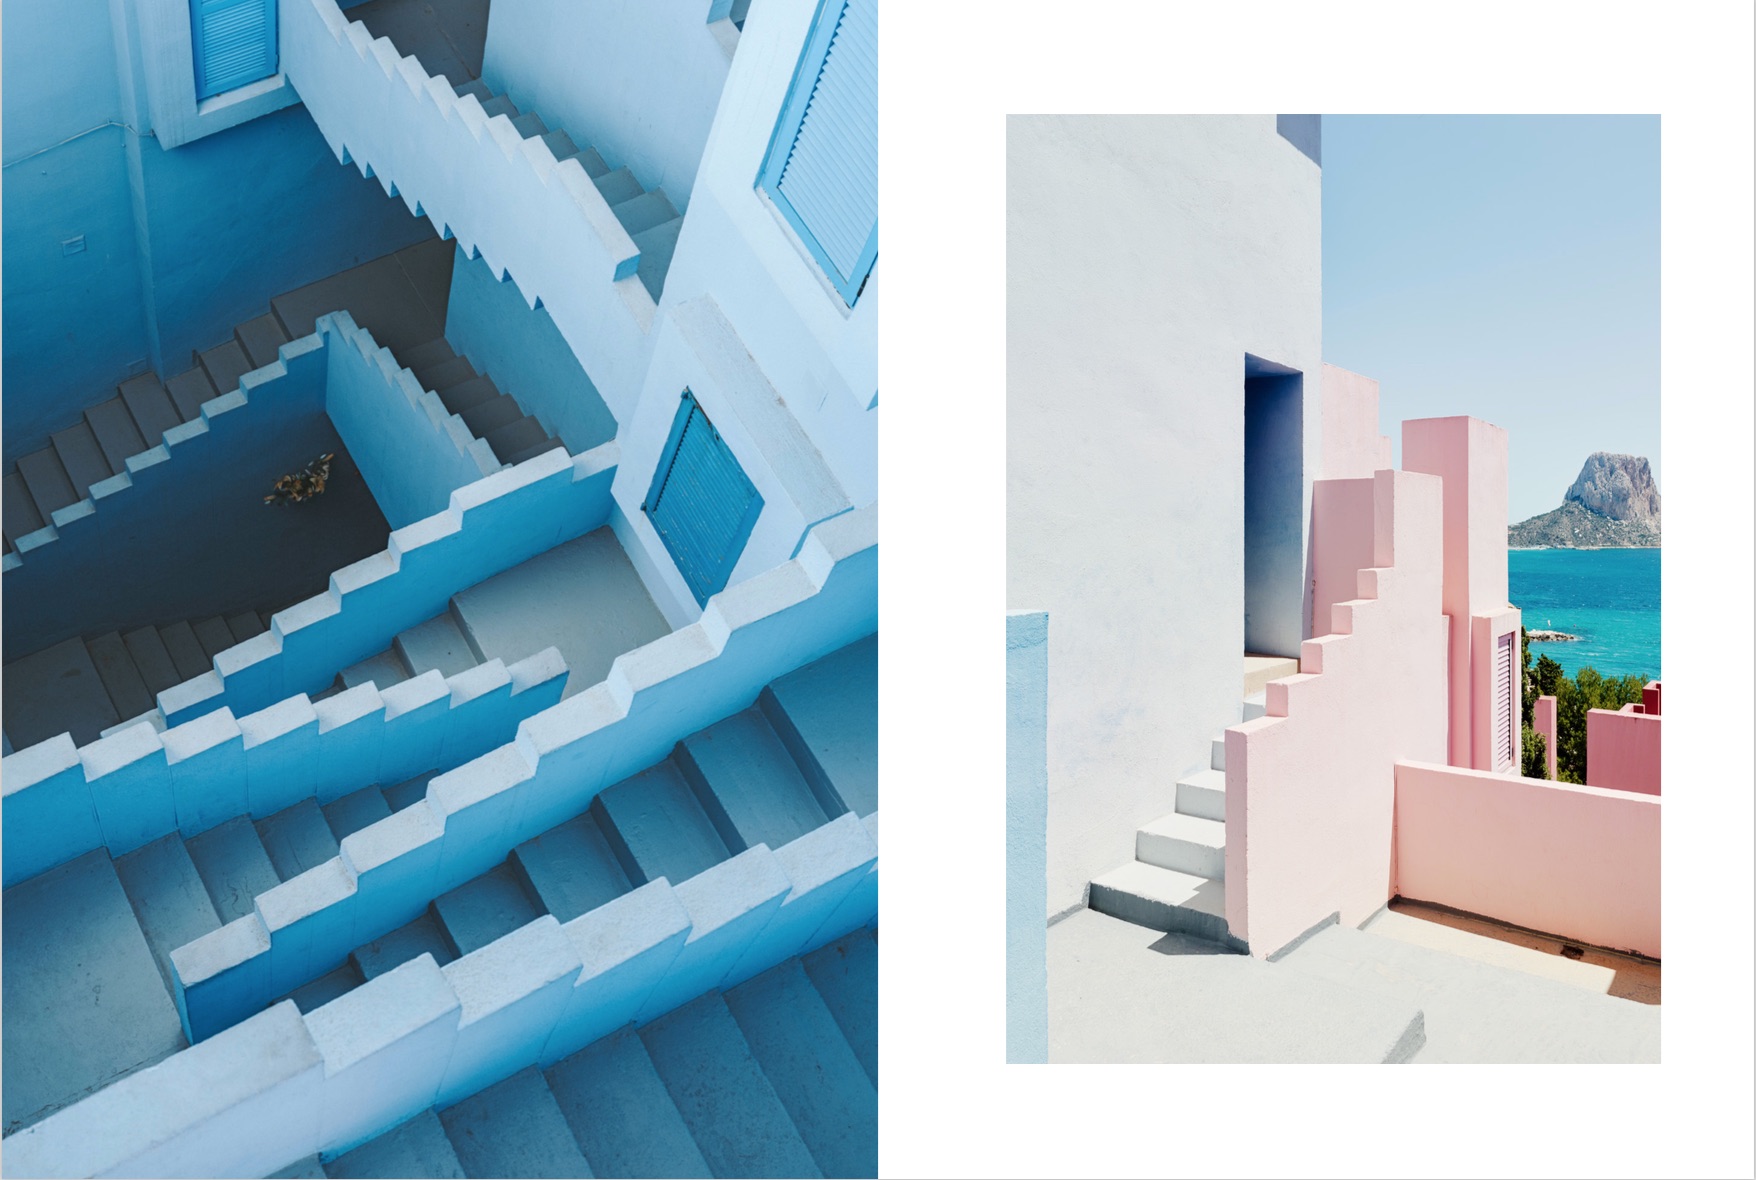 By Gestalten, Ricardo Bofill, Pablo Bofill from Ricardo Bofill: Visions of Architecture copyright Gestalten 2019